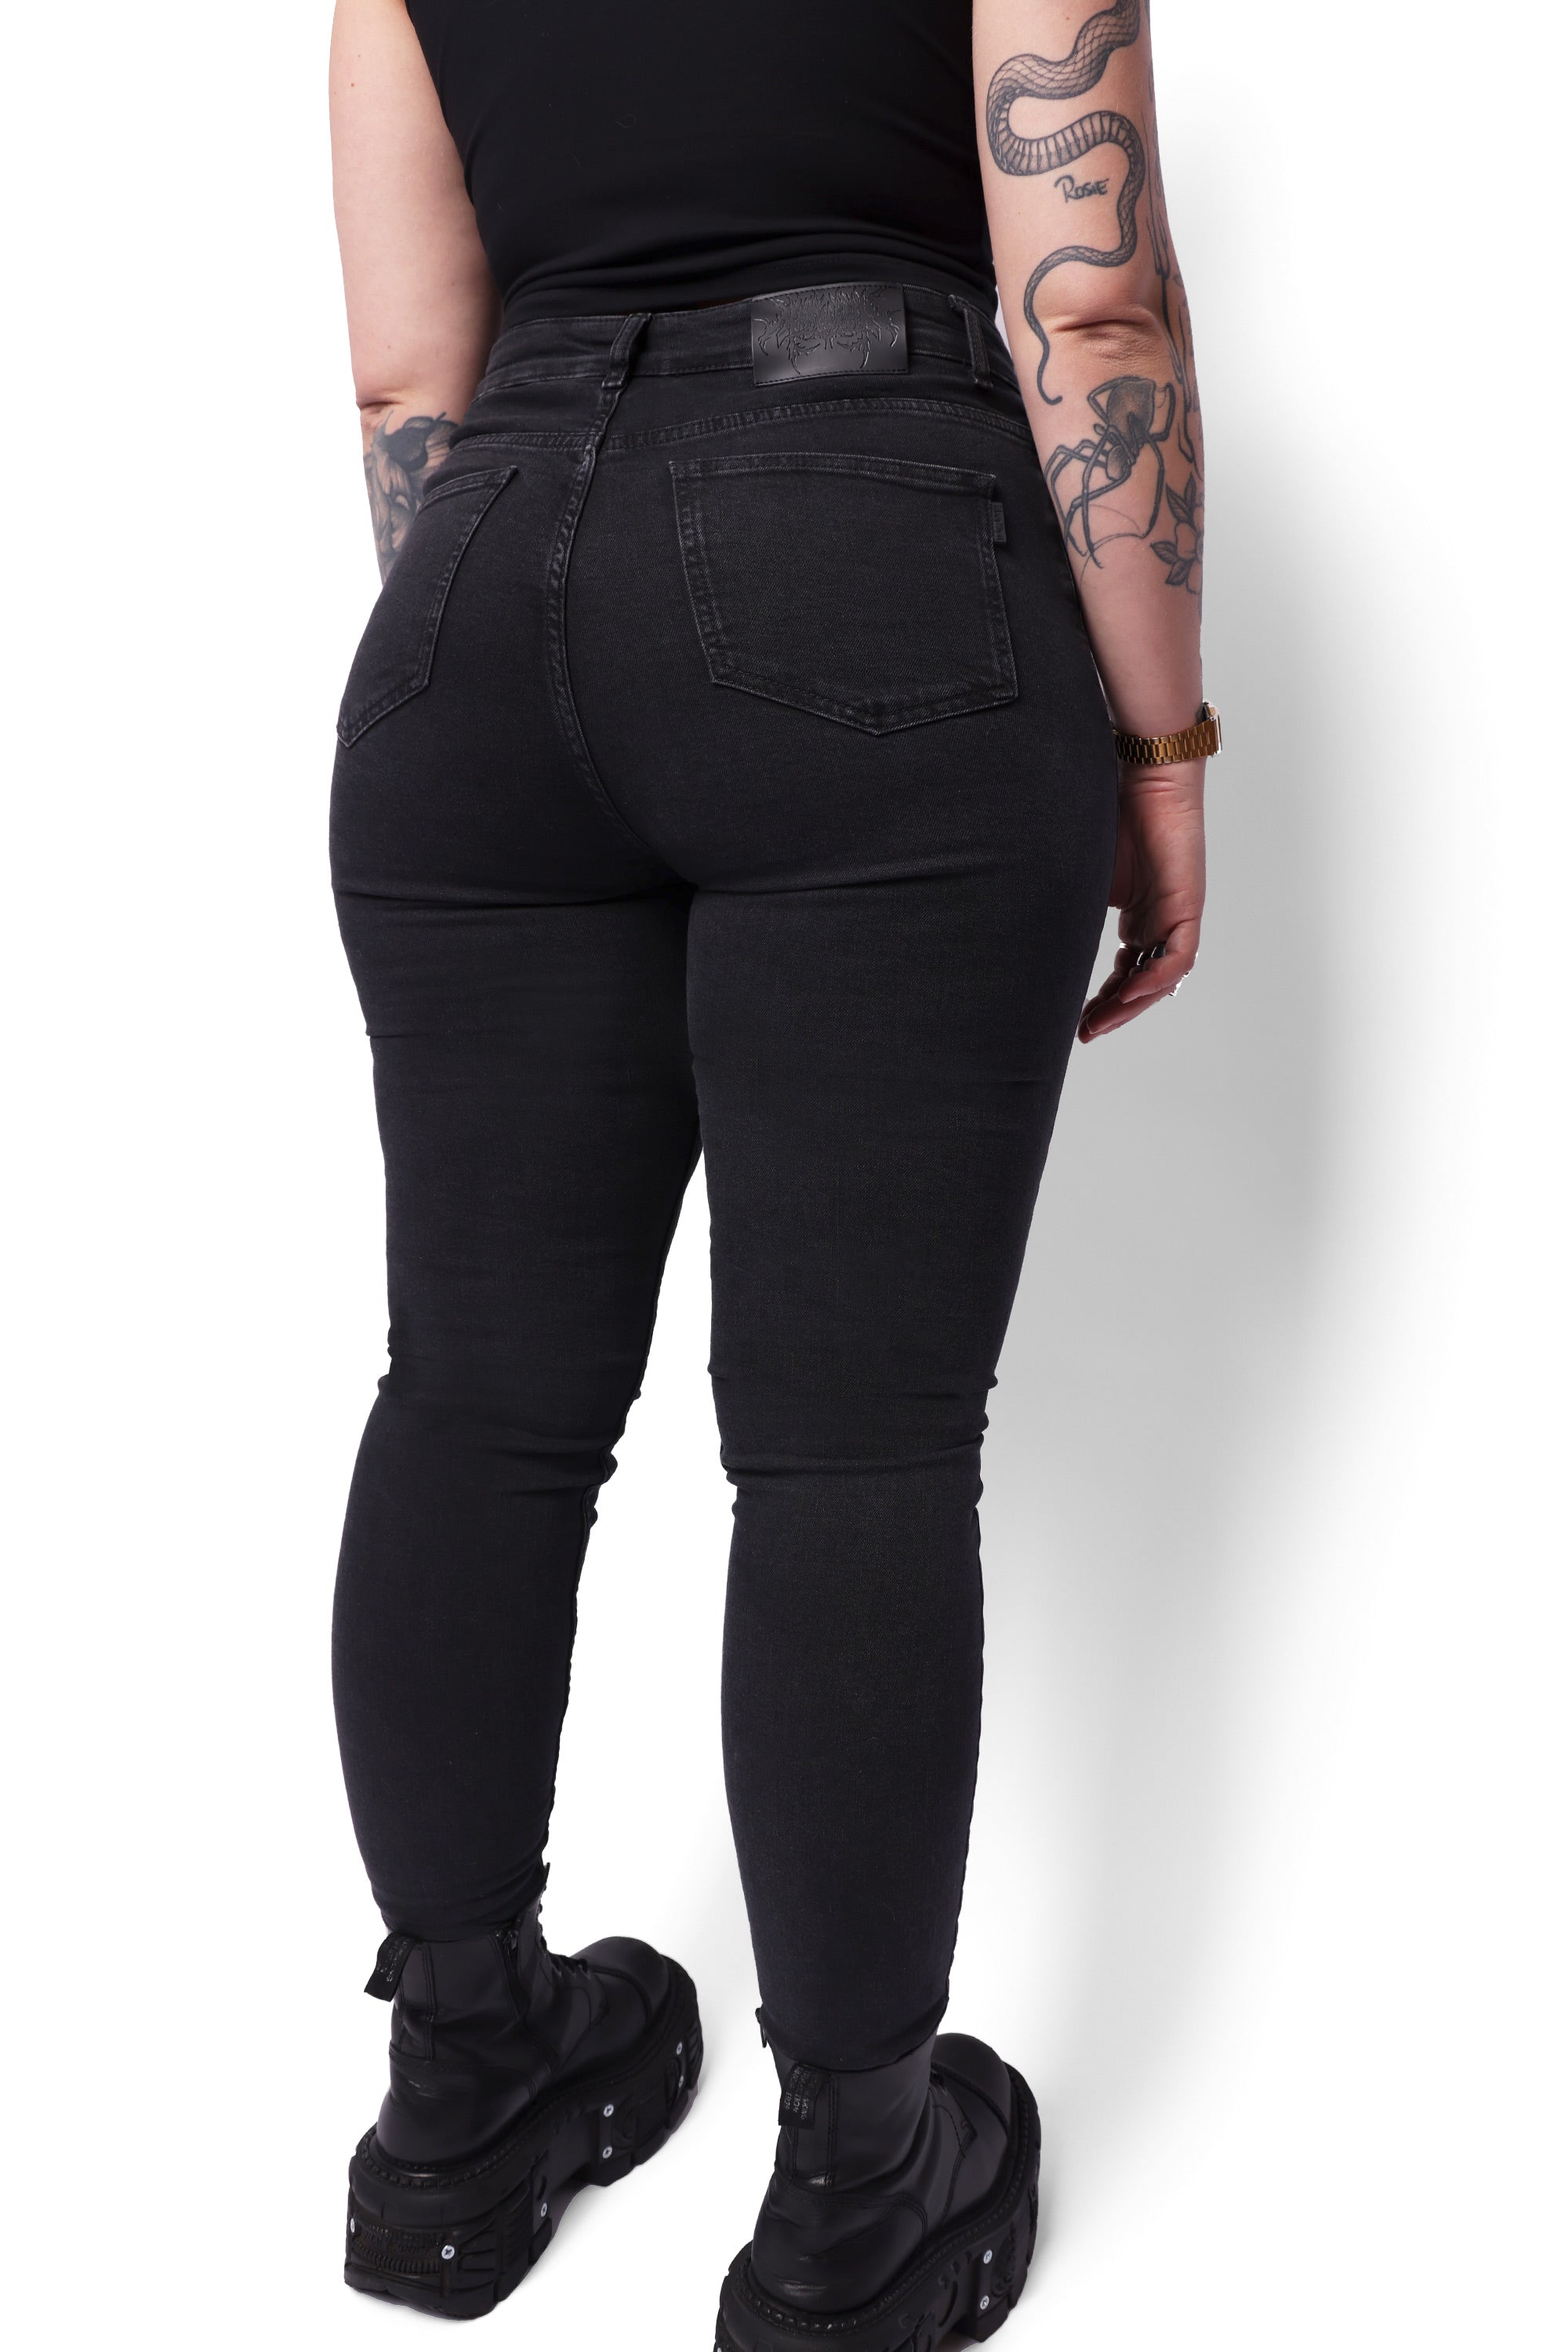 Fuzzdandy Drainpipe Skinny Trousers Jeans Striped Mod Indie White Black (30  Waist x 30 Leg) : Amazon.co.uk: Fashion